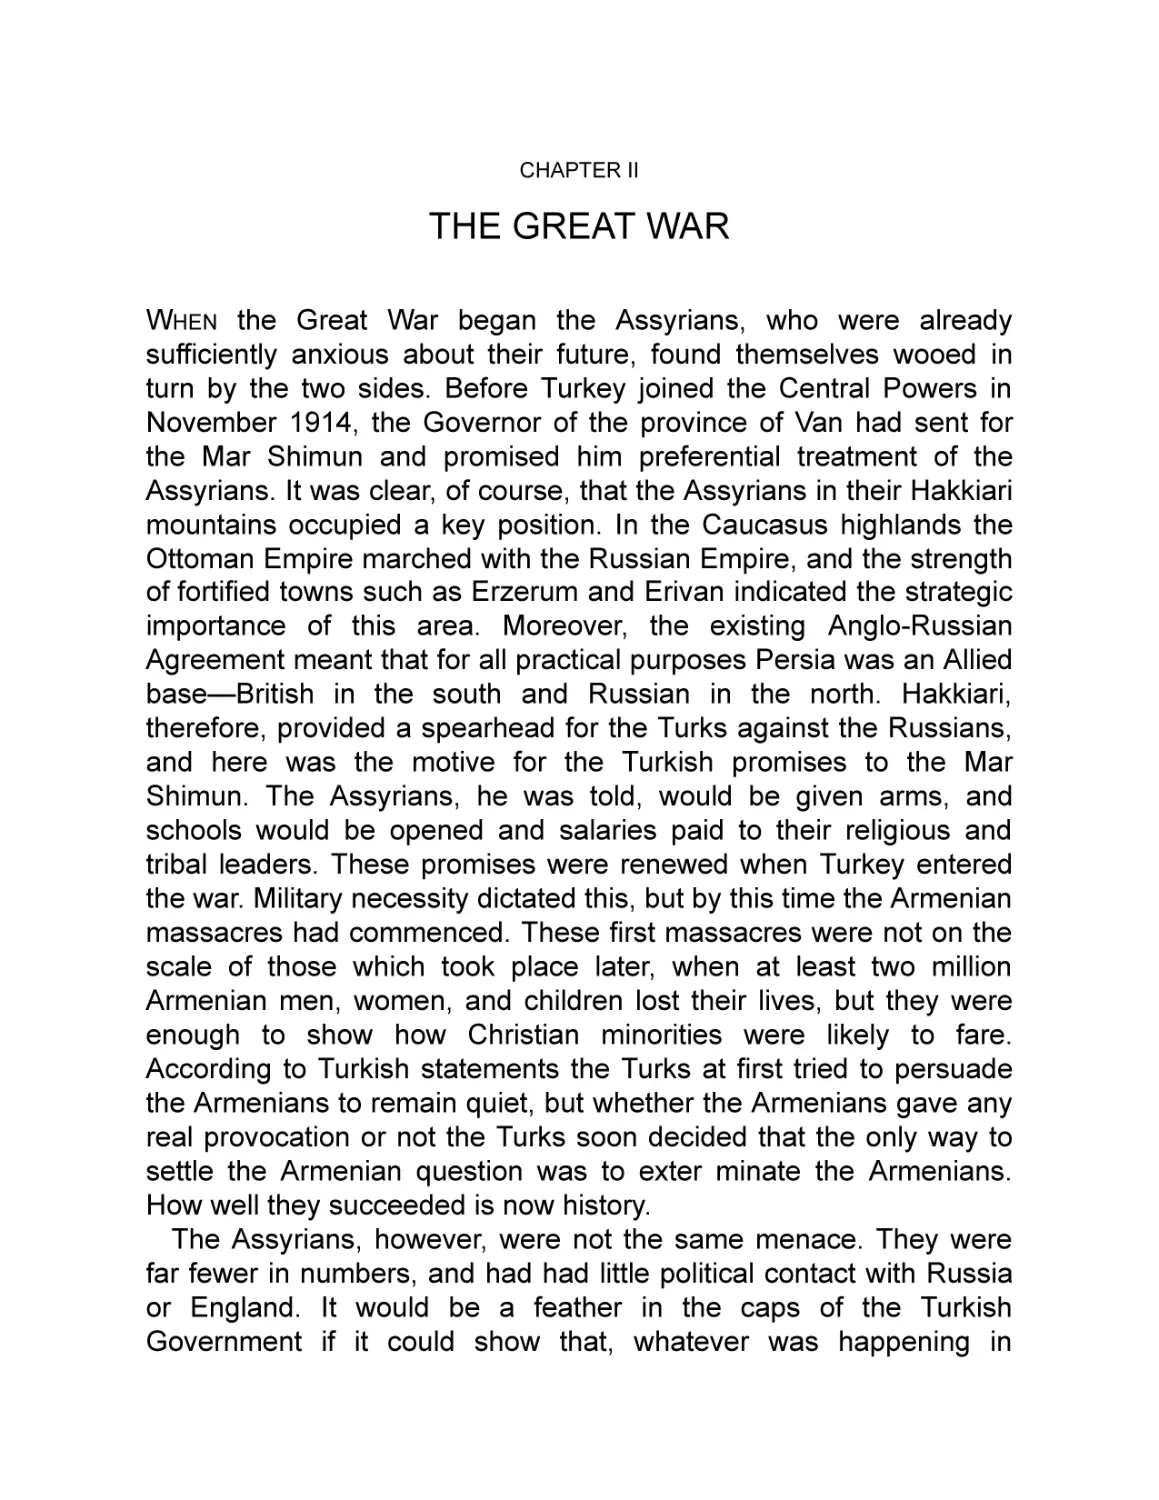 II The Great War